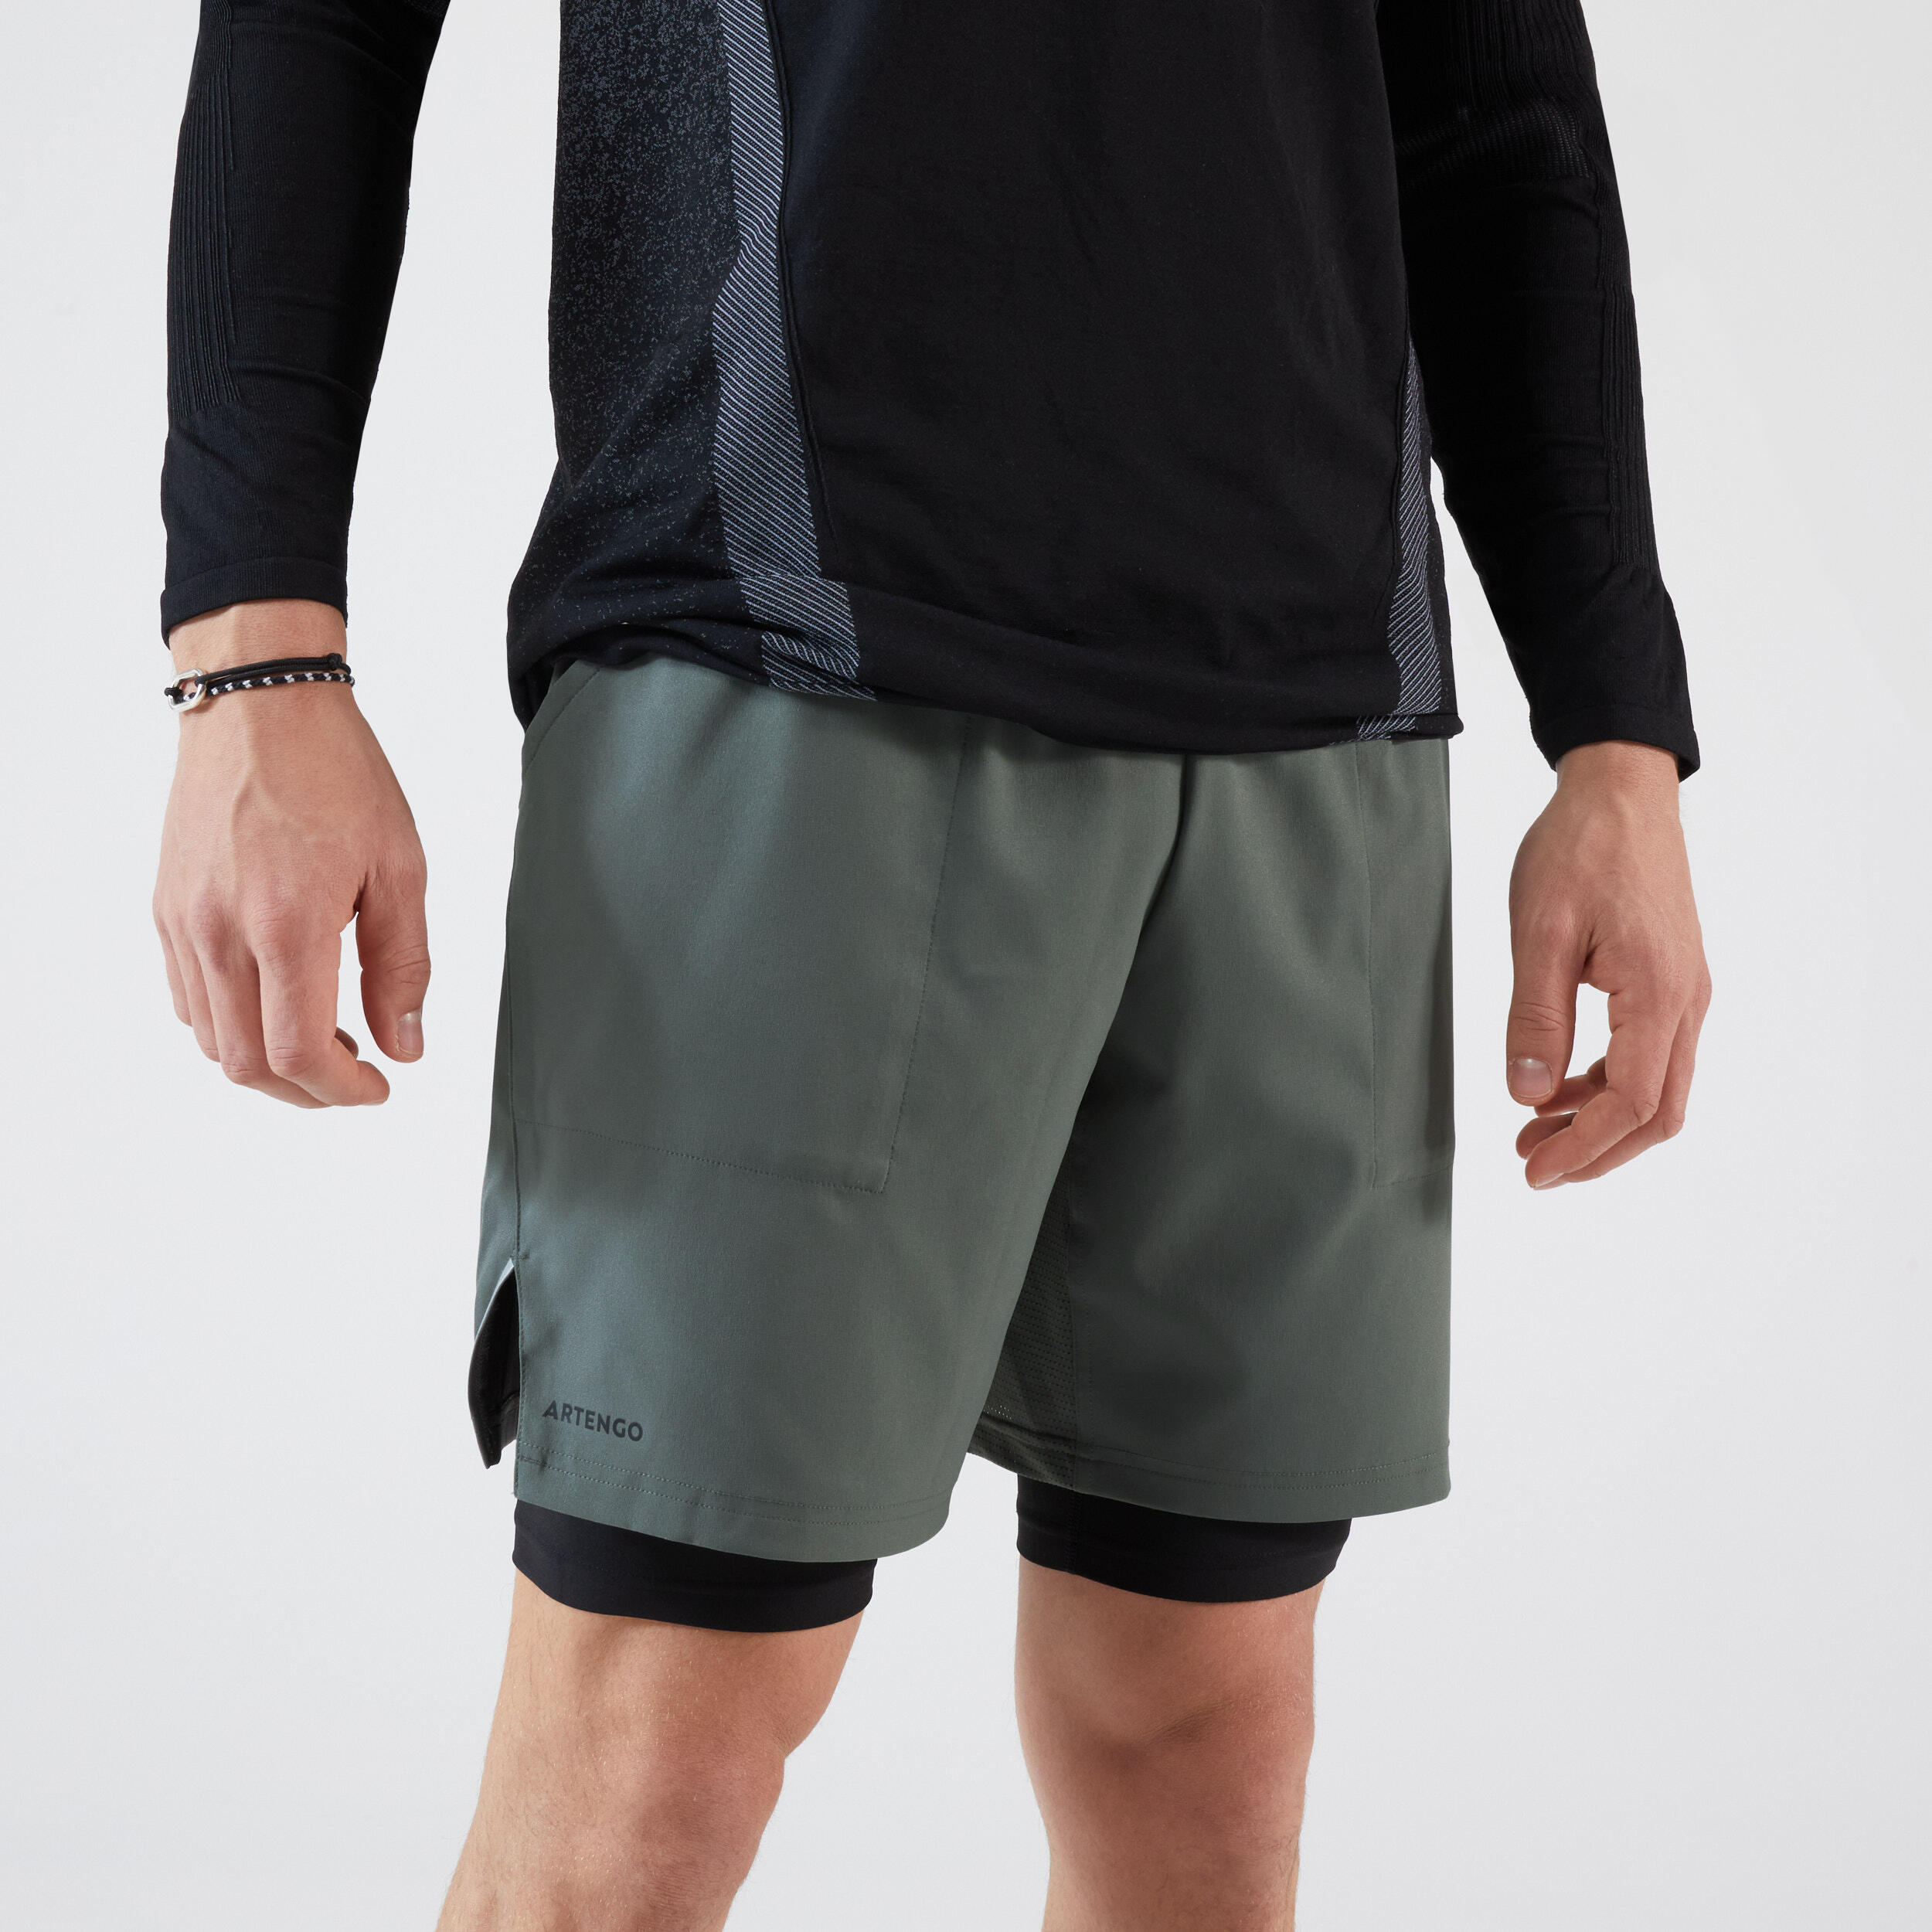 Men's Tennis 2-in-1 Shorts and Undershorts Thermic - Grey/Khaki/Black 2/6